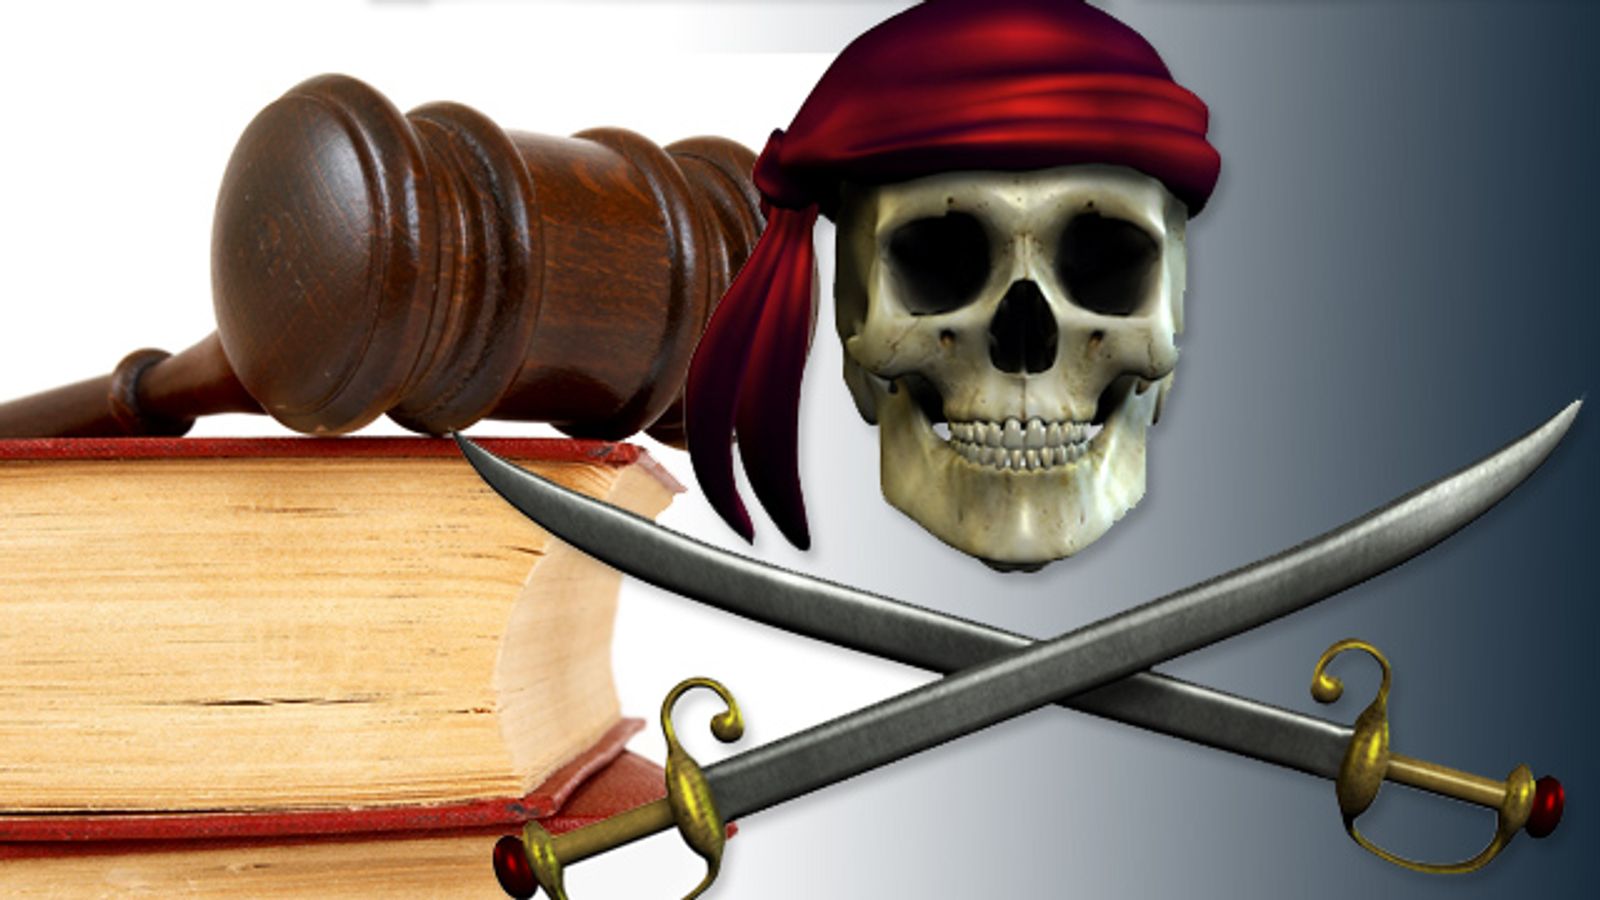 Copyright Lawyers Demand Pirate Bay Shutdown